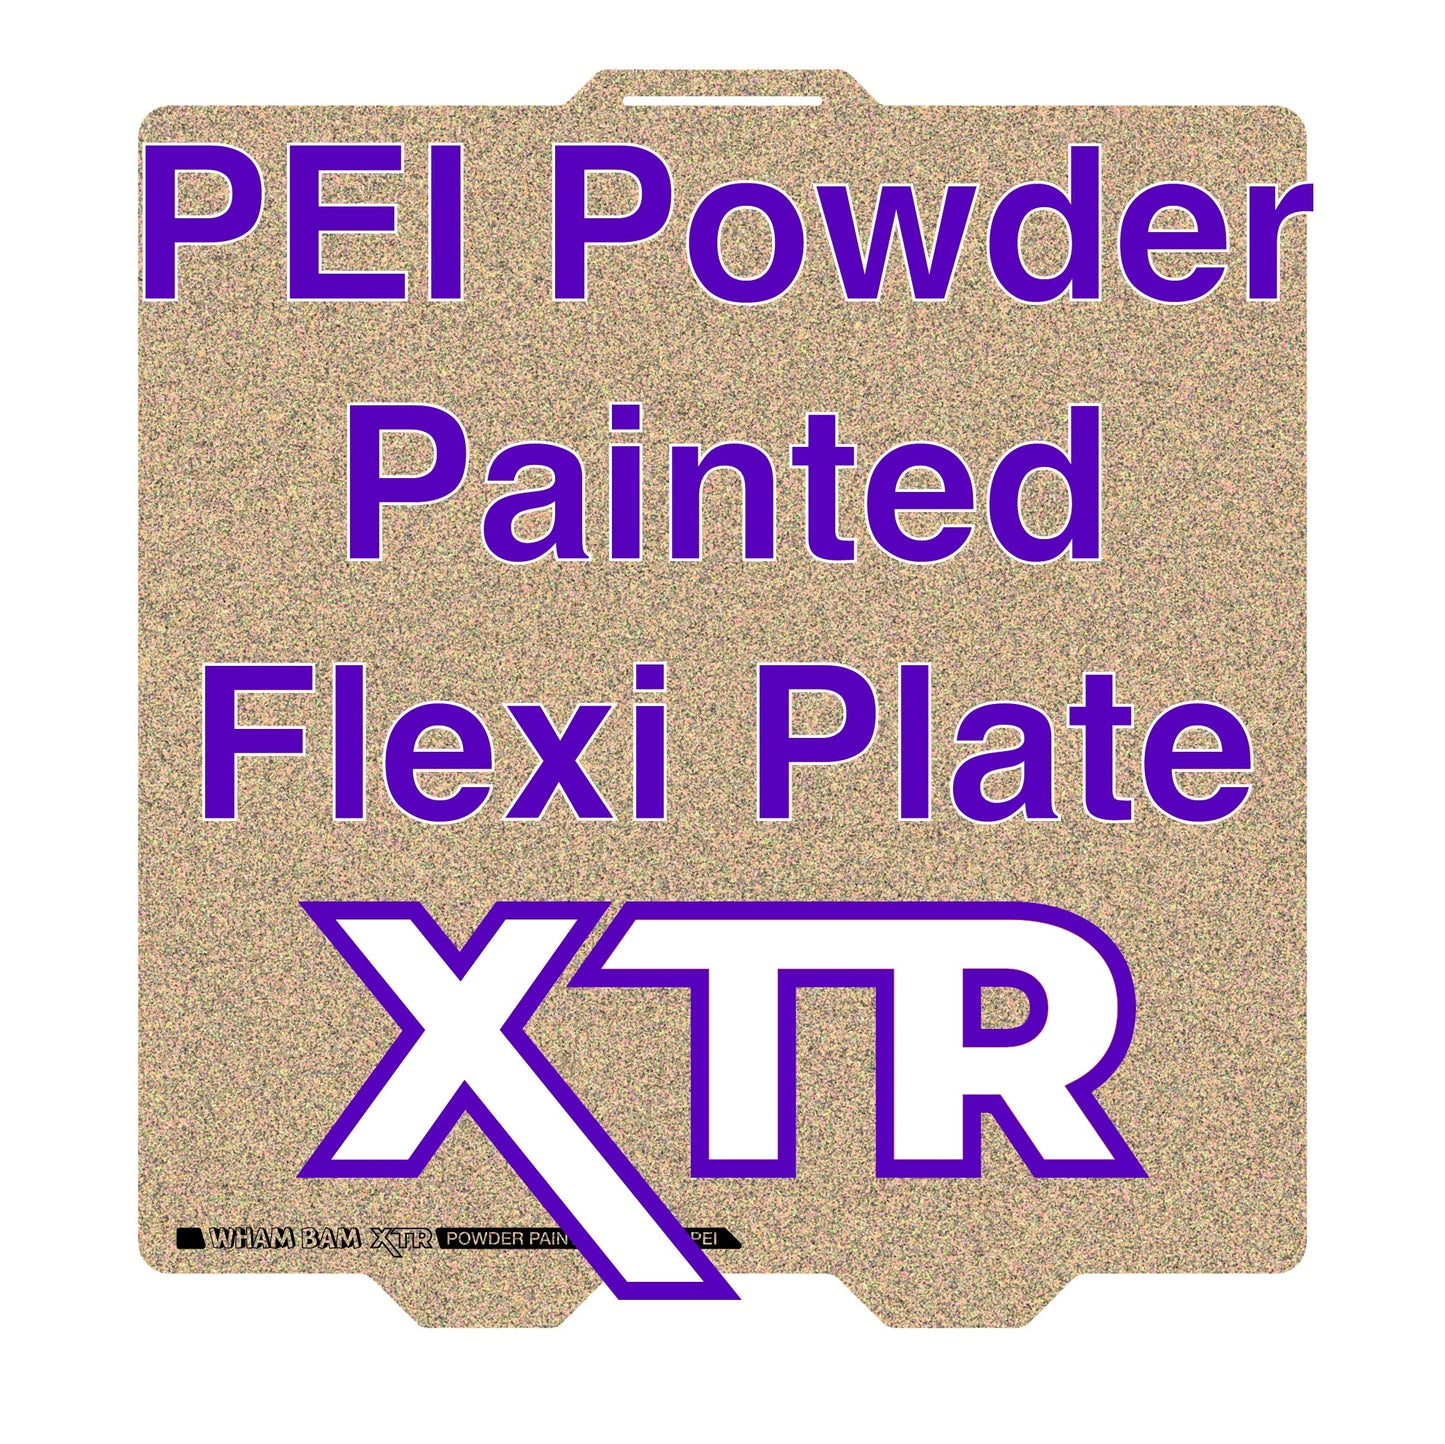 XTR Powder Painted PEI Flexi Plate - 258 x 258 - Bambu Lab X1, X1 Carbon (or X1C), X1E, P1P, and P1PS